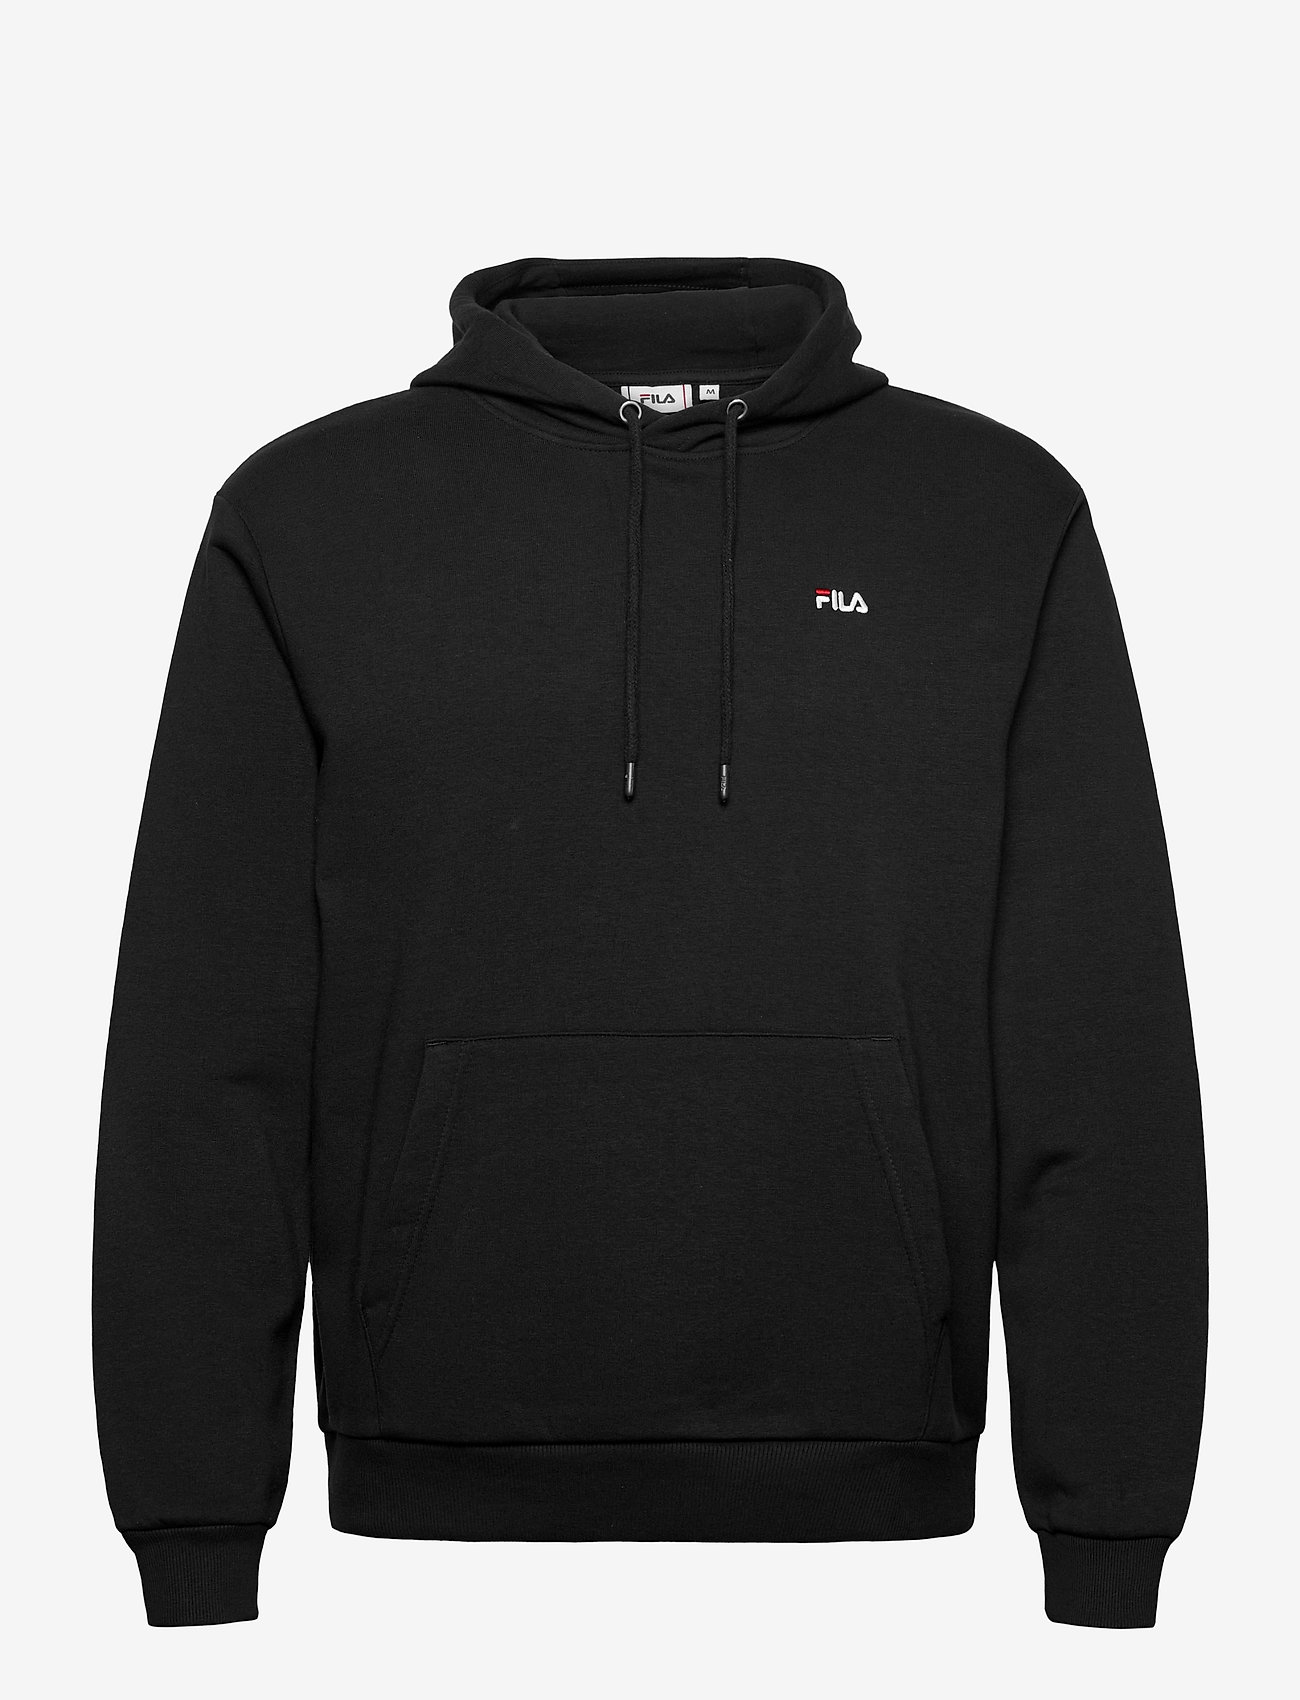 hoodies for men fila